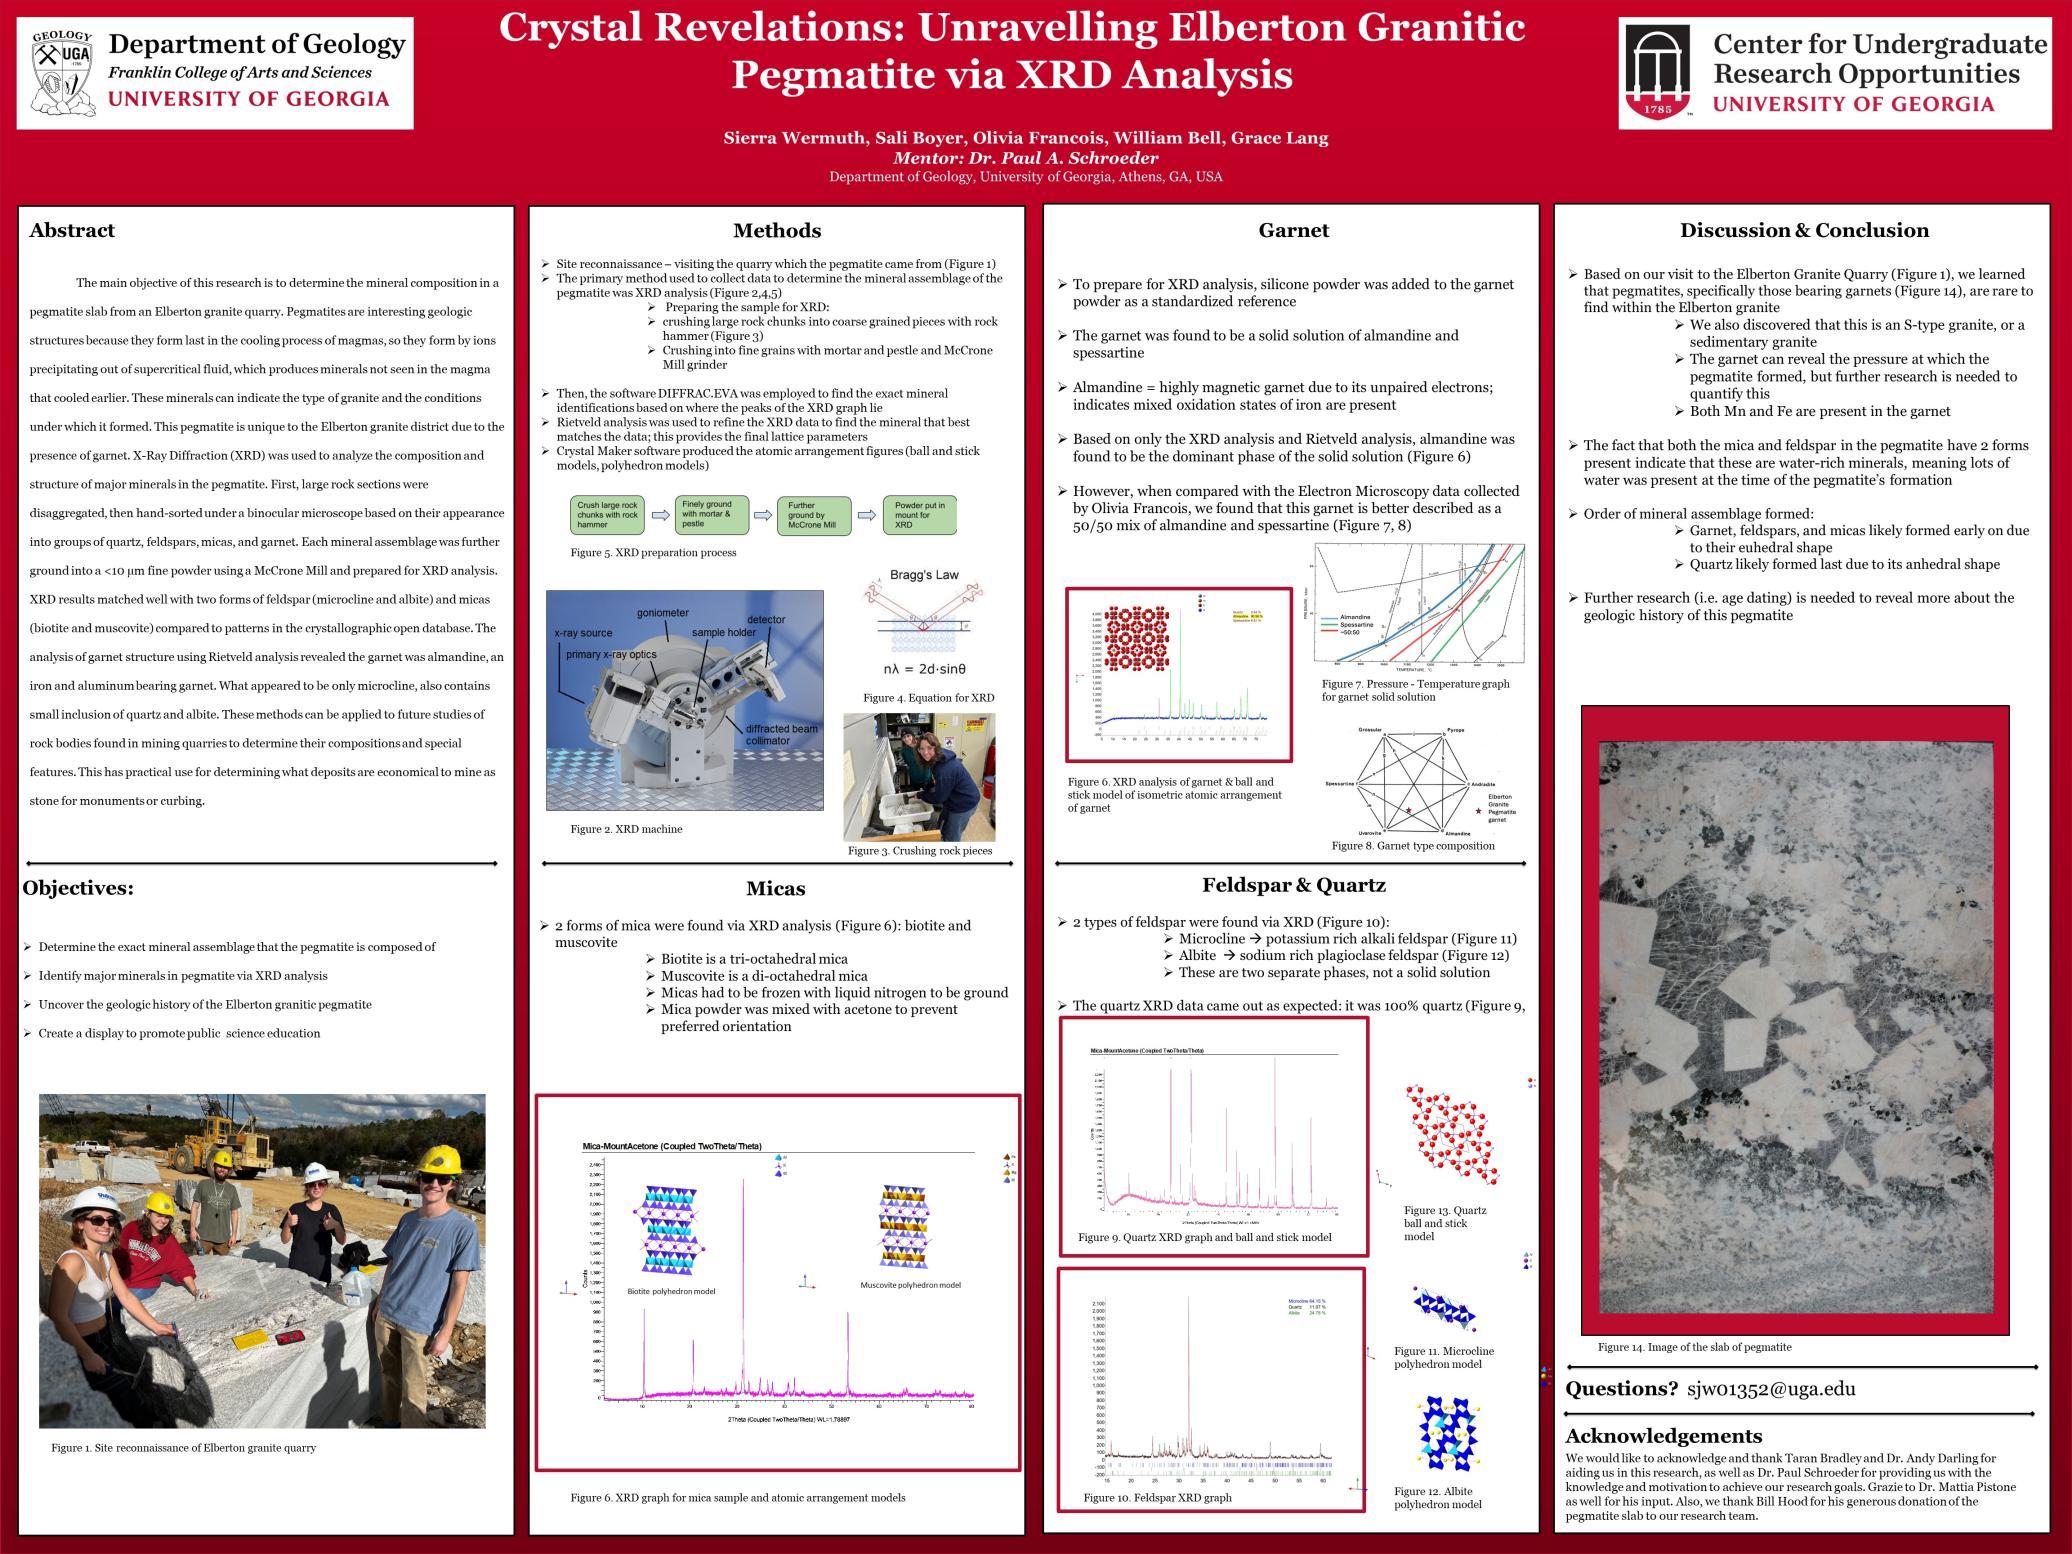 Sierra Wermuth - Crystal Revelations: Unravelling Elberton Granitic Pegmatite via XRD Analysis.